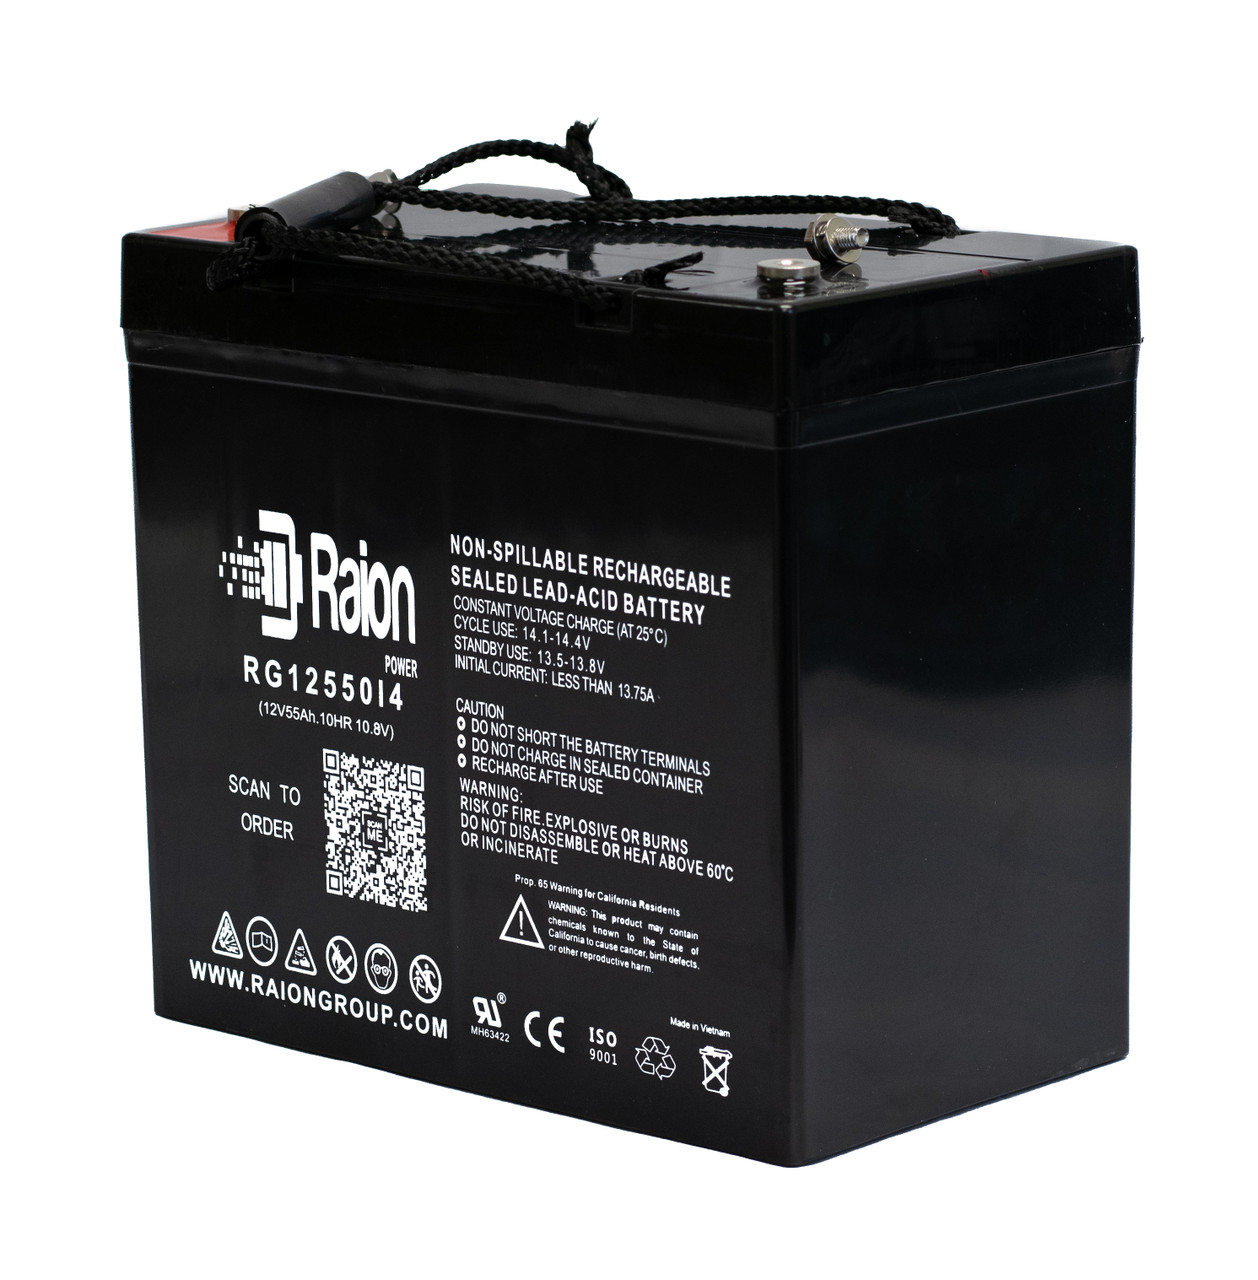 Raion Power 12V 55Ah Replacement UPS Battery Cartridge for Powerware BAT-0121